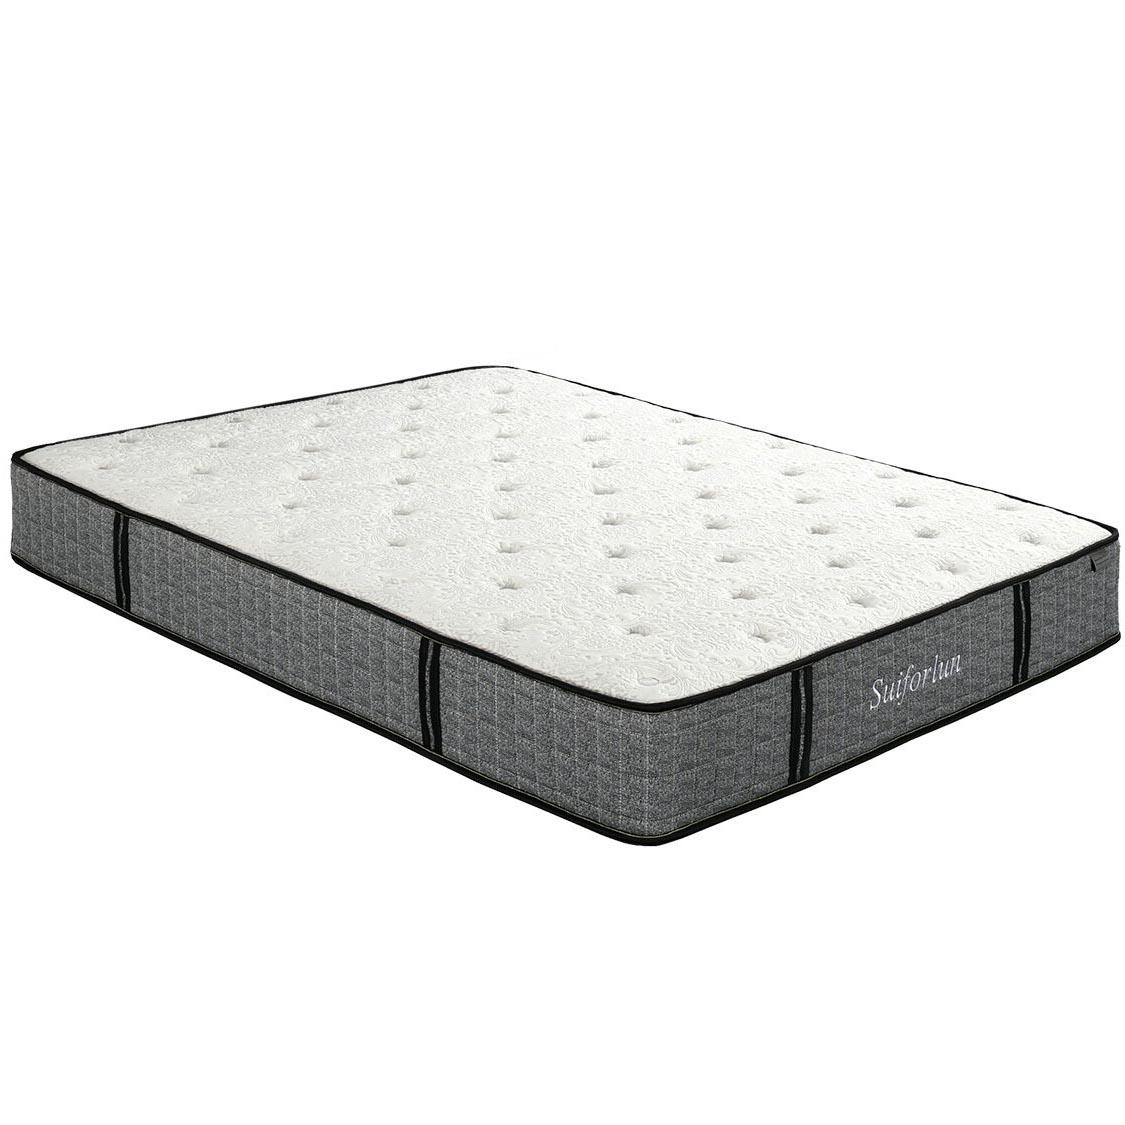 Suiforlun mattress breathable latex hybrid mattress supplier for sleeping-2